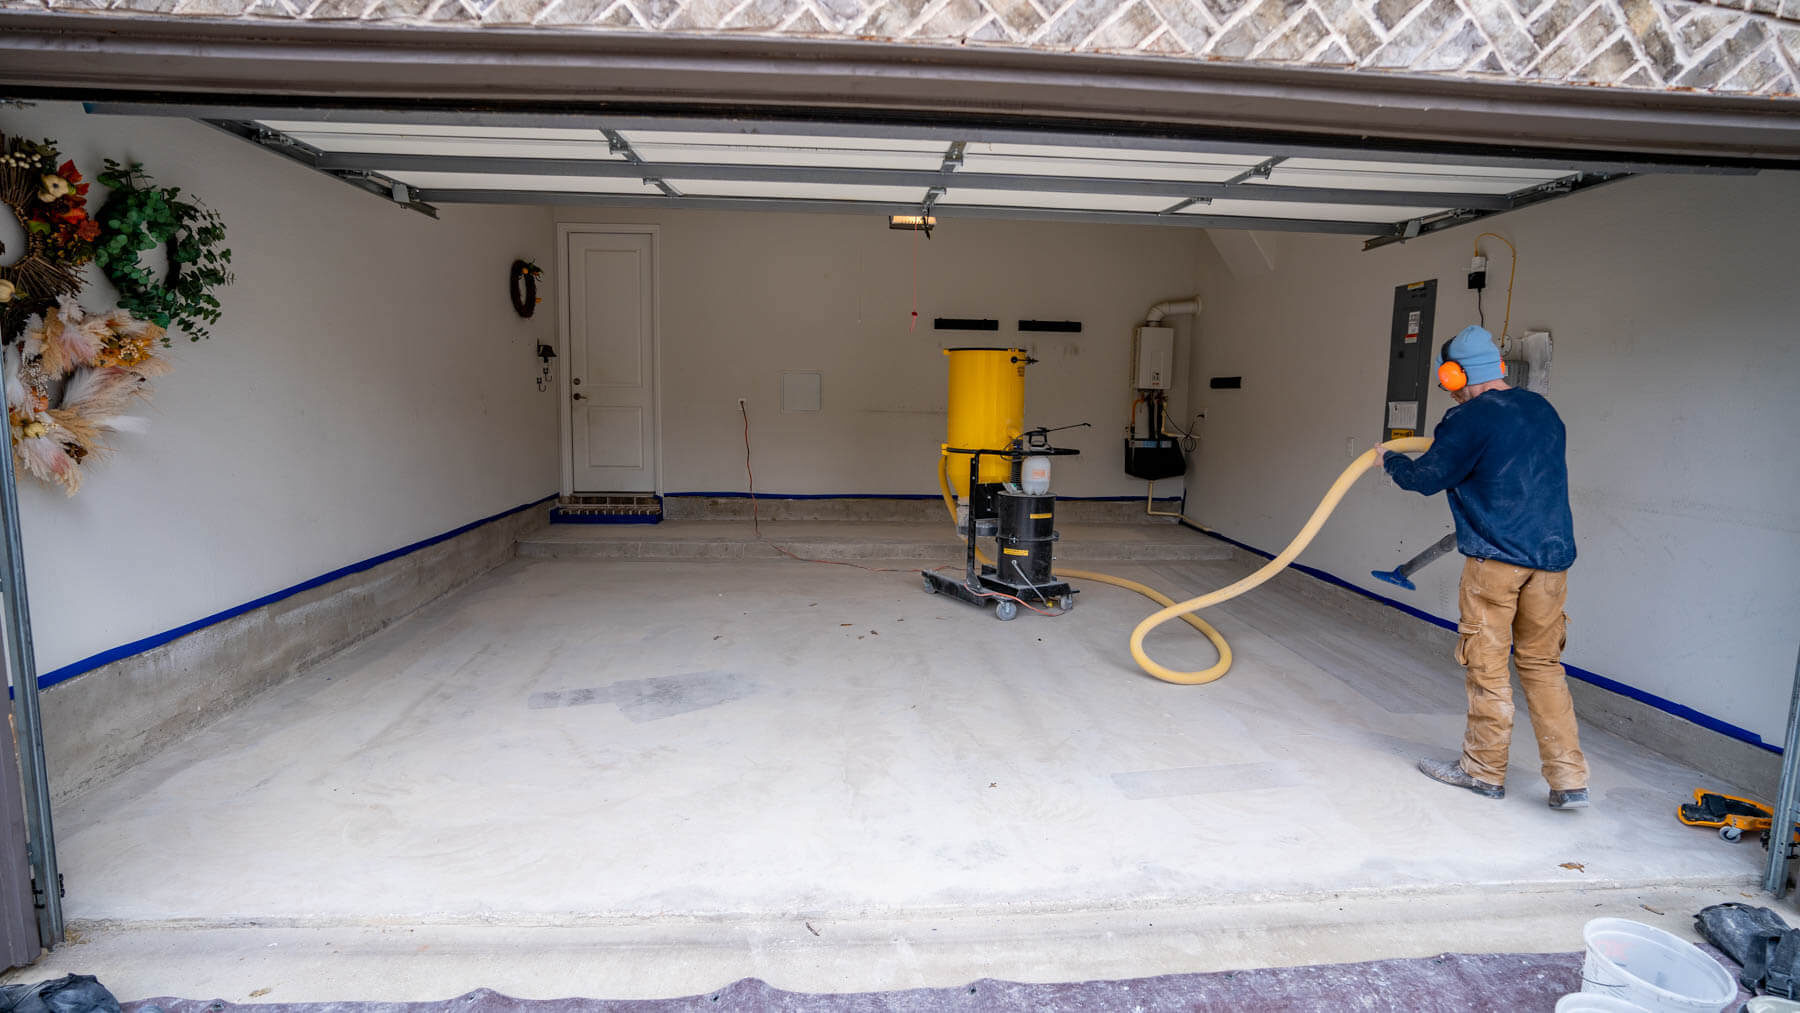 Process of resurfacing concrete floor before applying coatings of polyaspartic